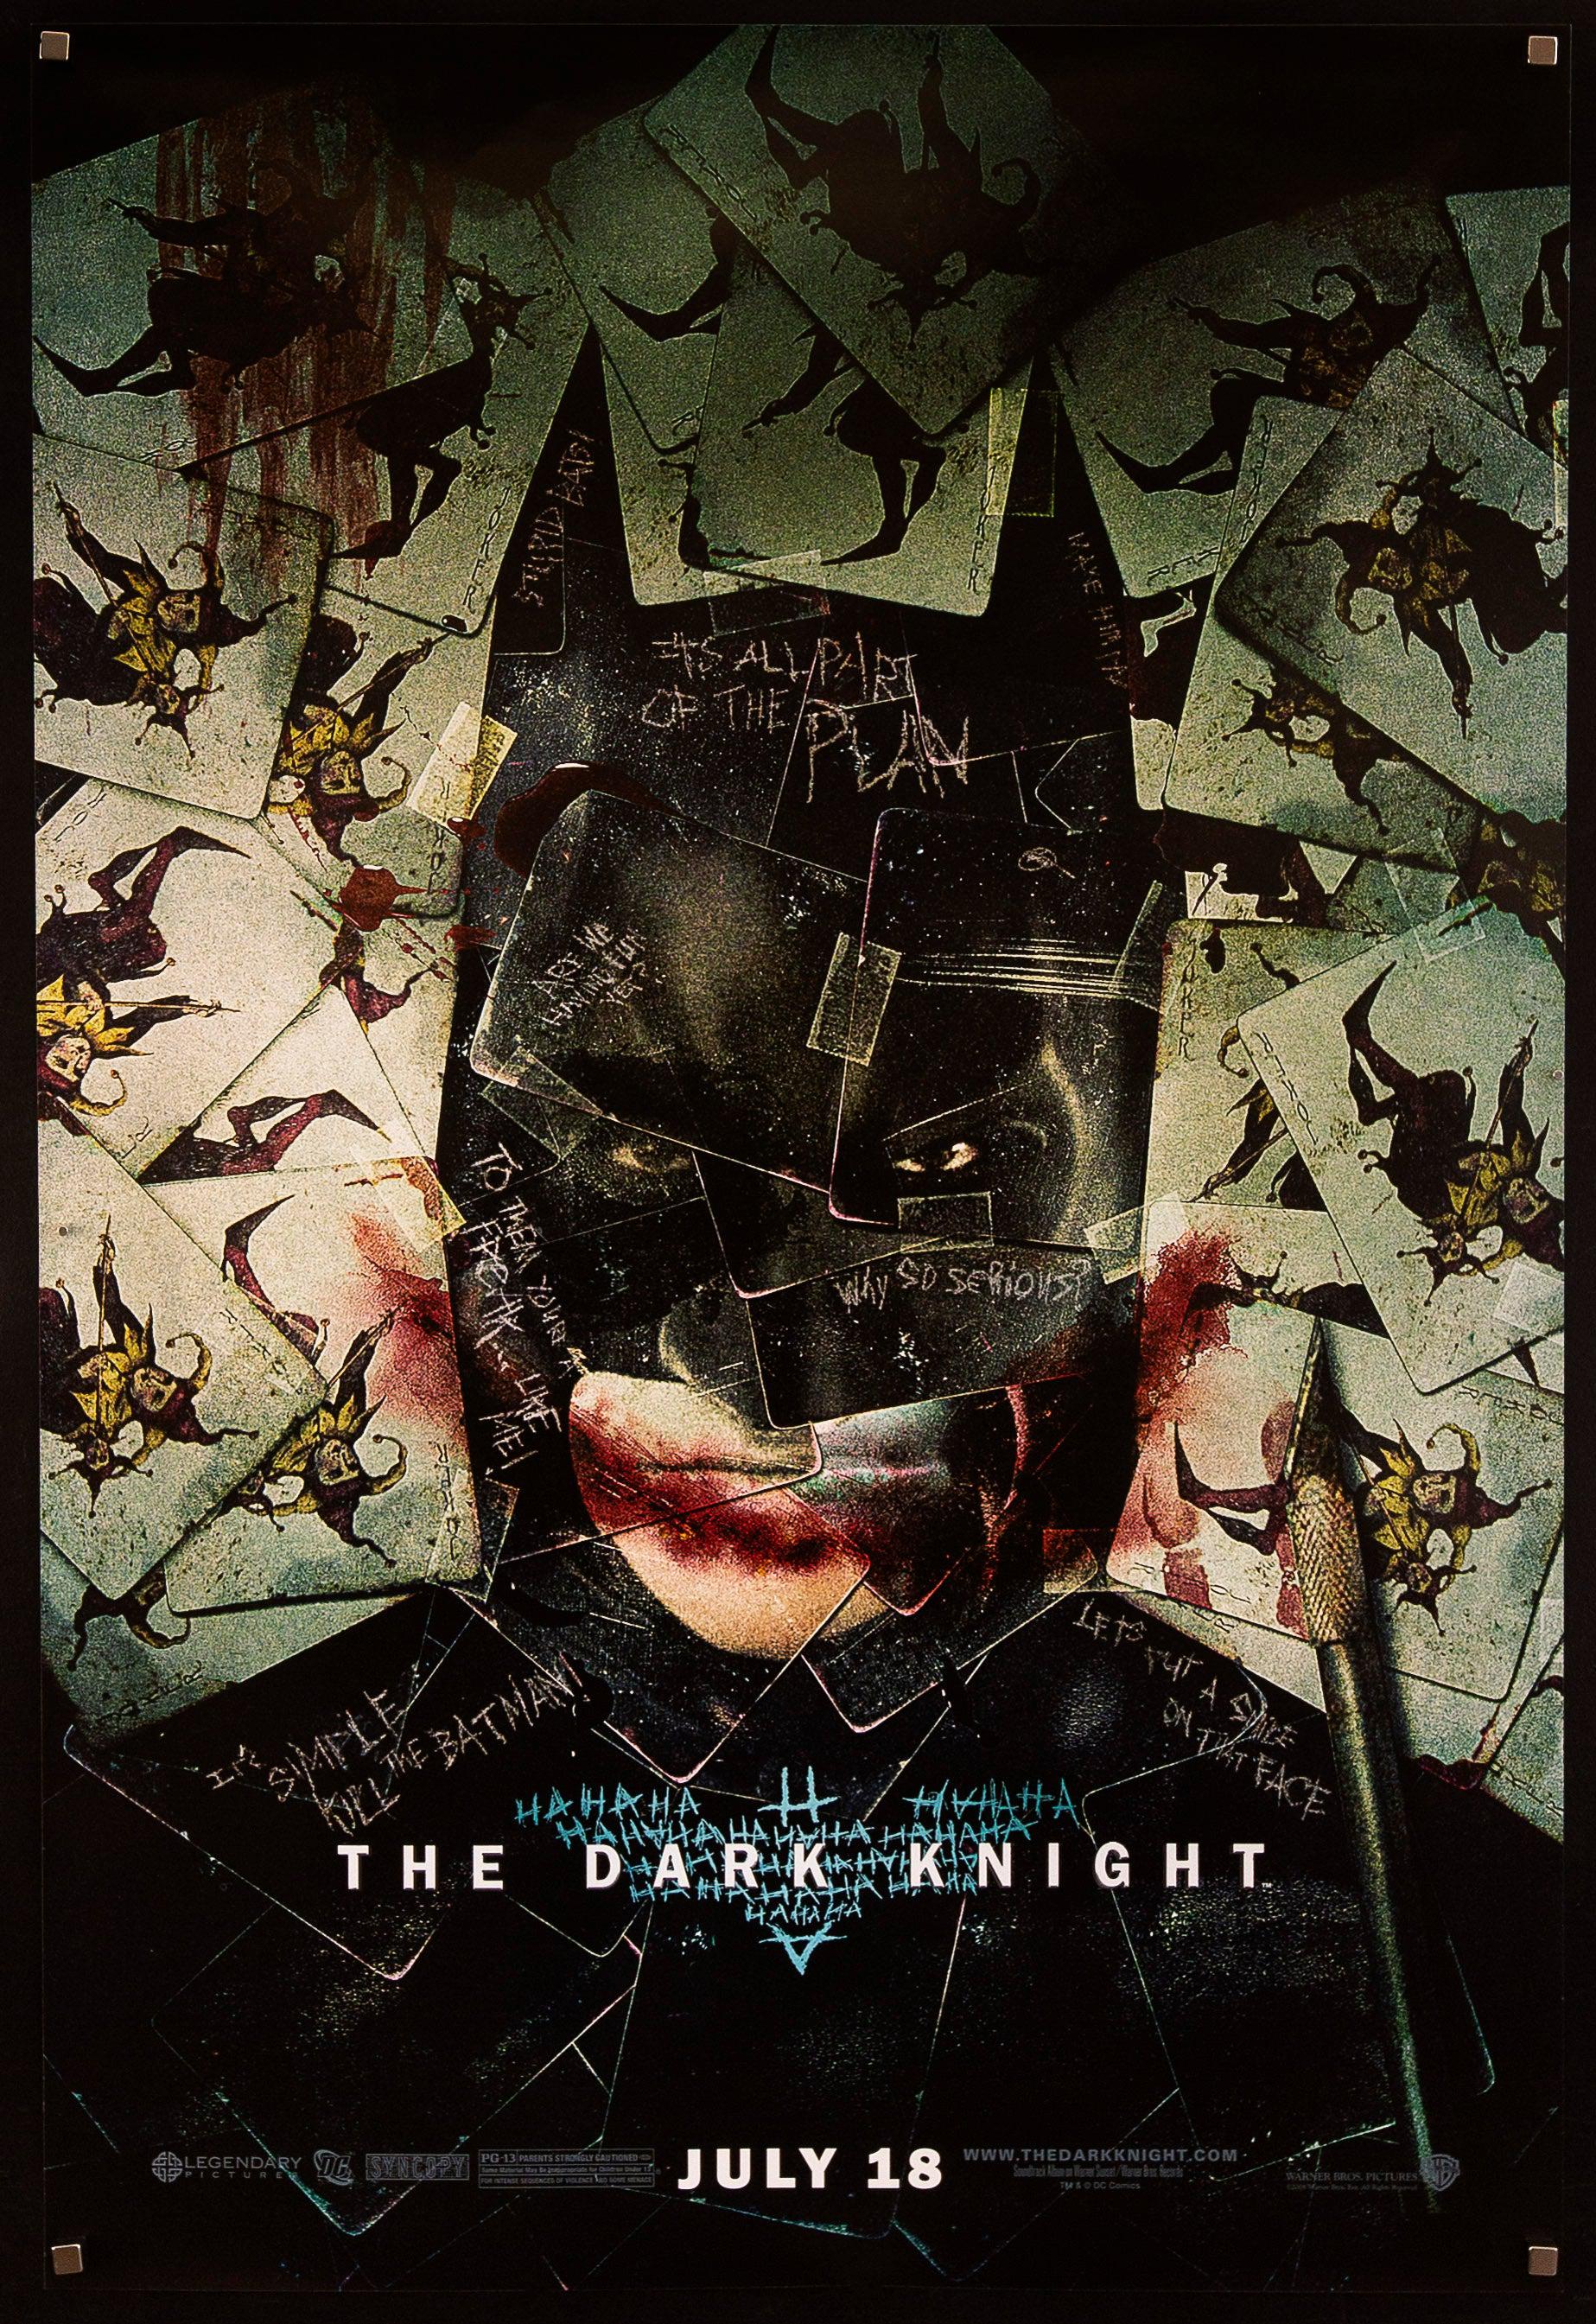 The Dark Knight Movie Poster 2008 1 Sheet (27x41)